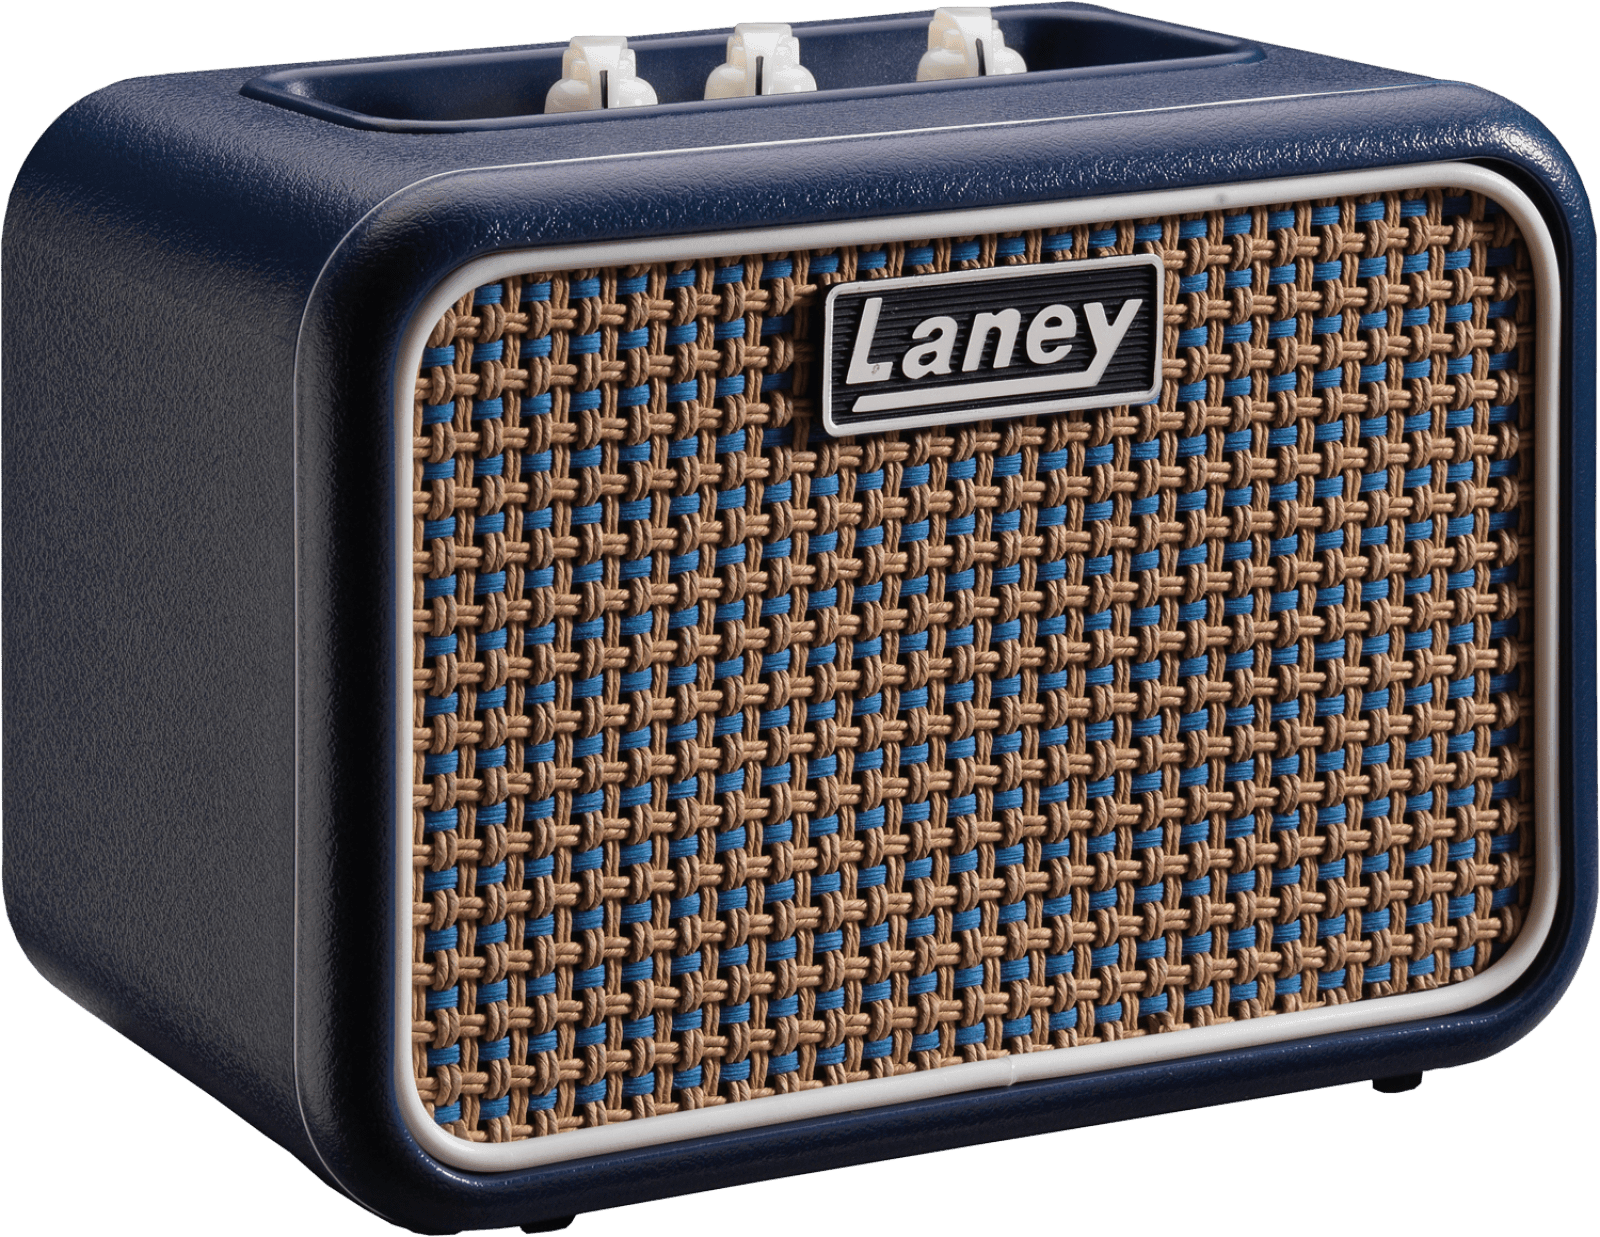 Lionheart 3 Watt Battery Amp - Guitars - Amplifiers by Laney at Muso's Stuff